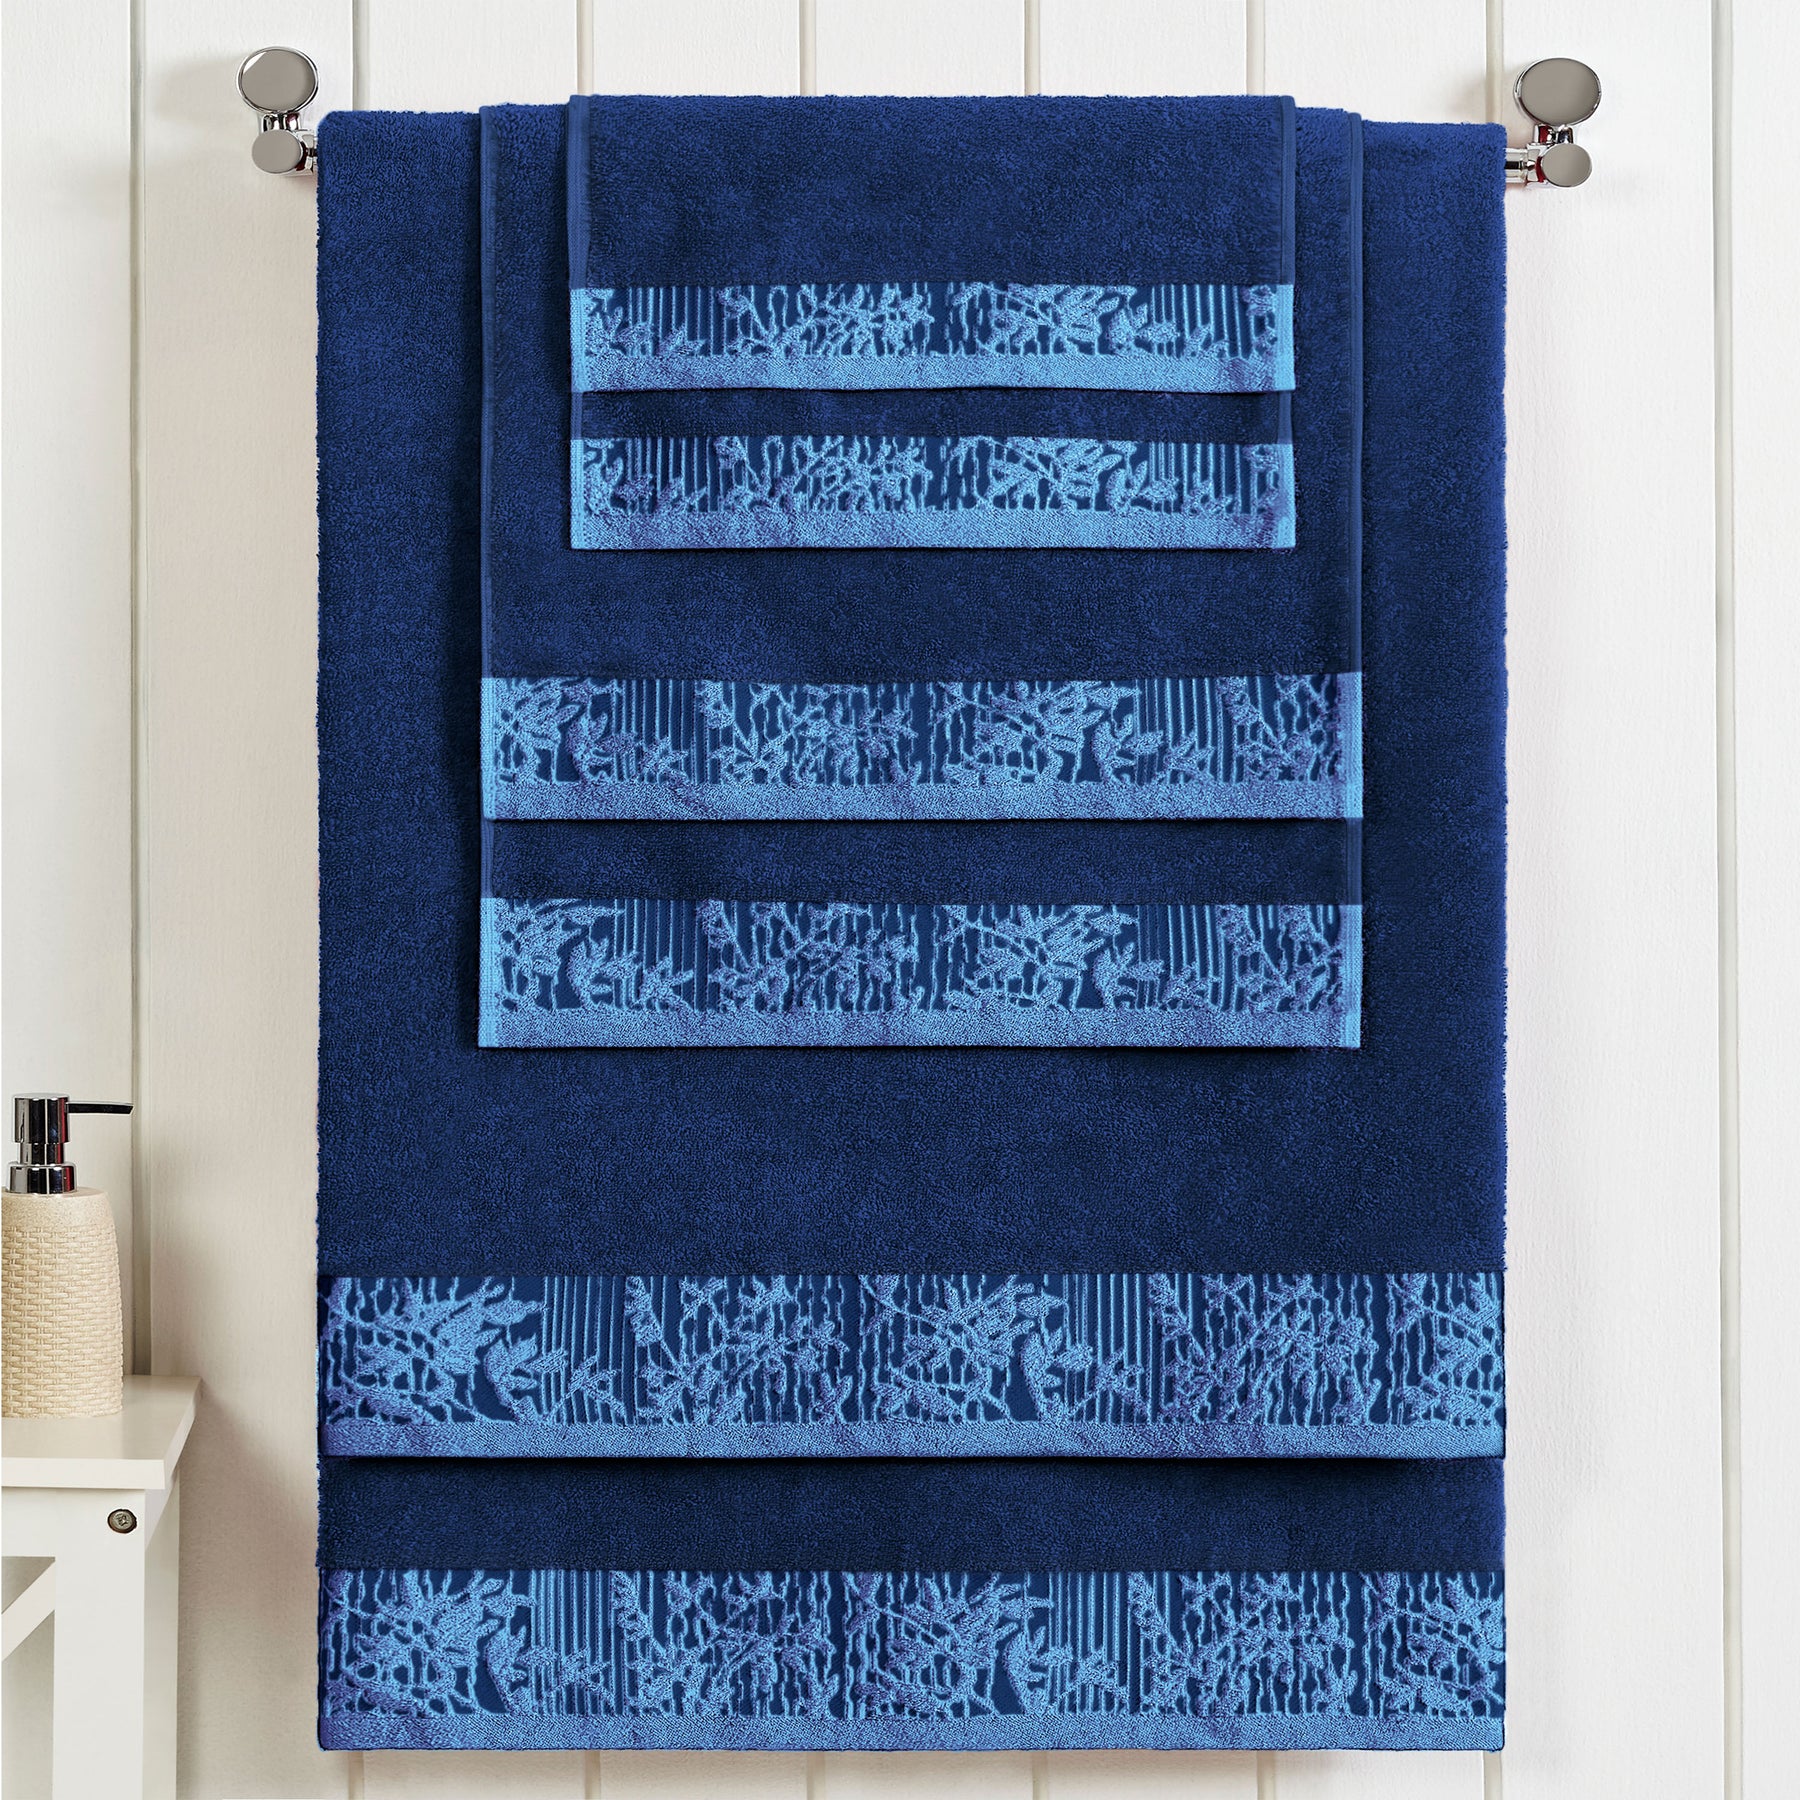 Superior Wisteria Cotton Floral Jacquard 6 Piece Towel Set  - Navy Blue